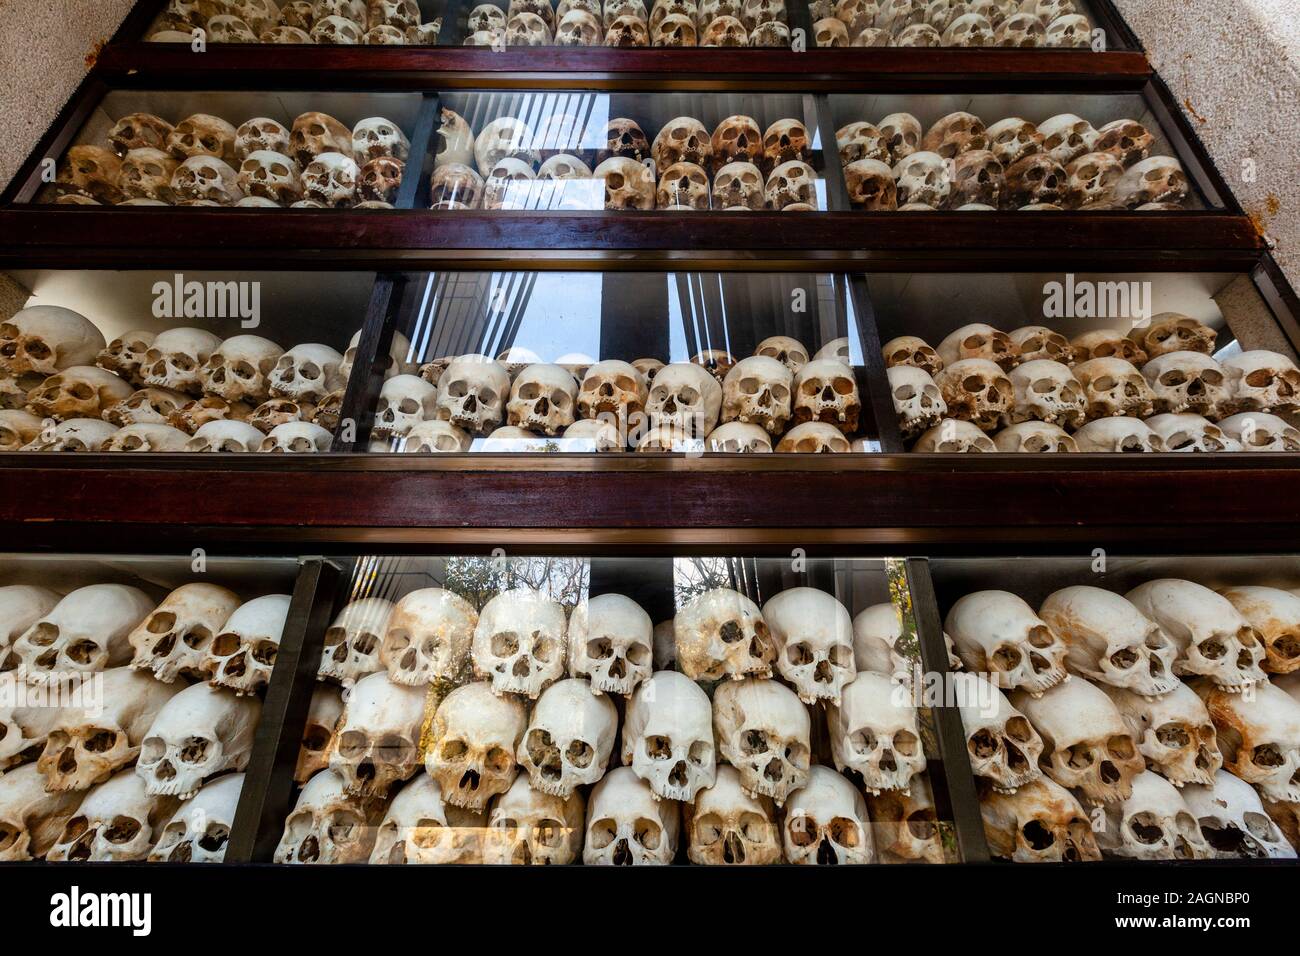 Choeung Ek Genocidal Center (The Killing Fields) Phnom Penh, Cambodia. Stock Photo